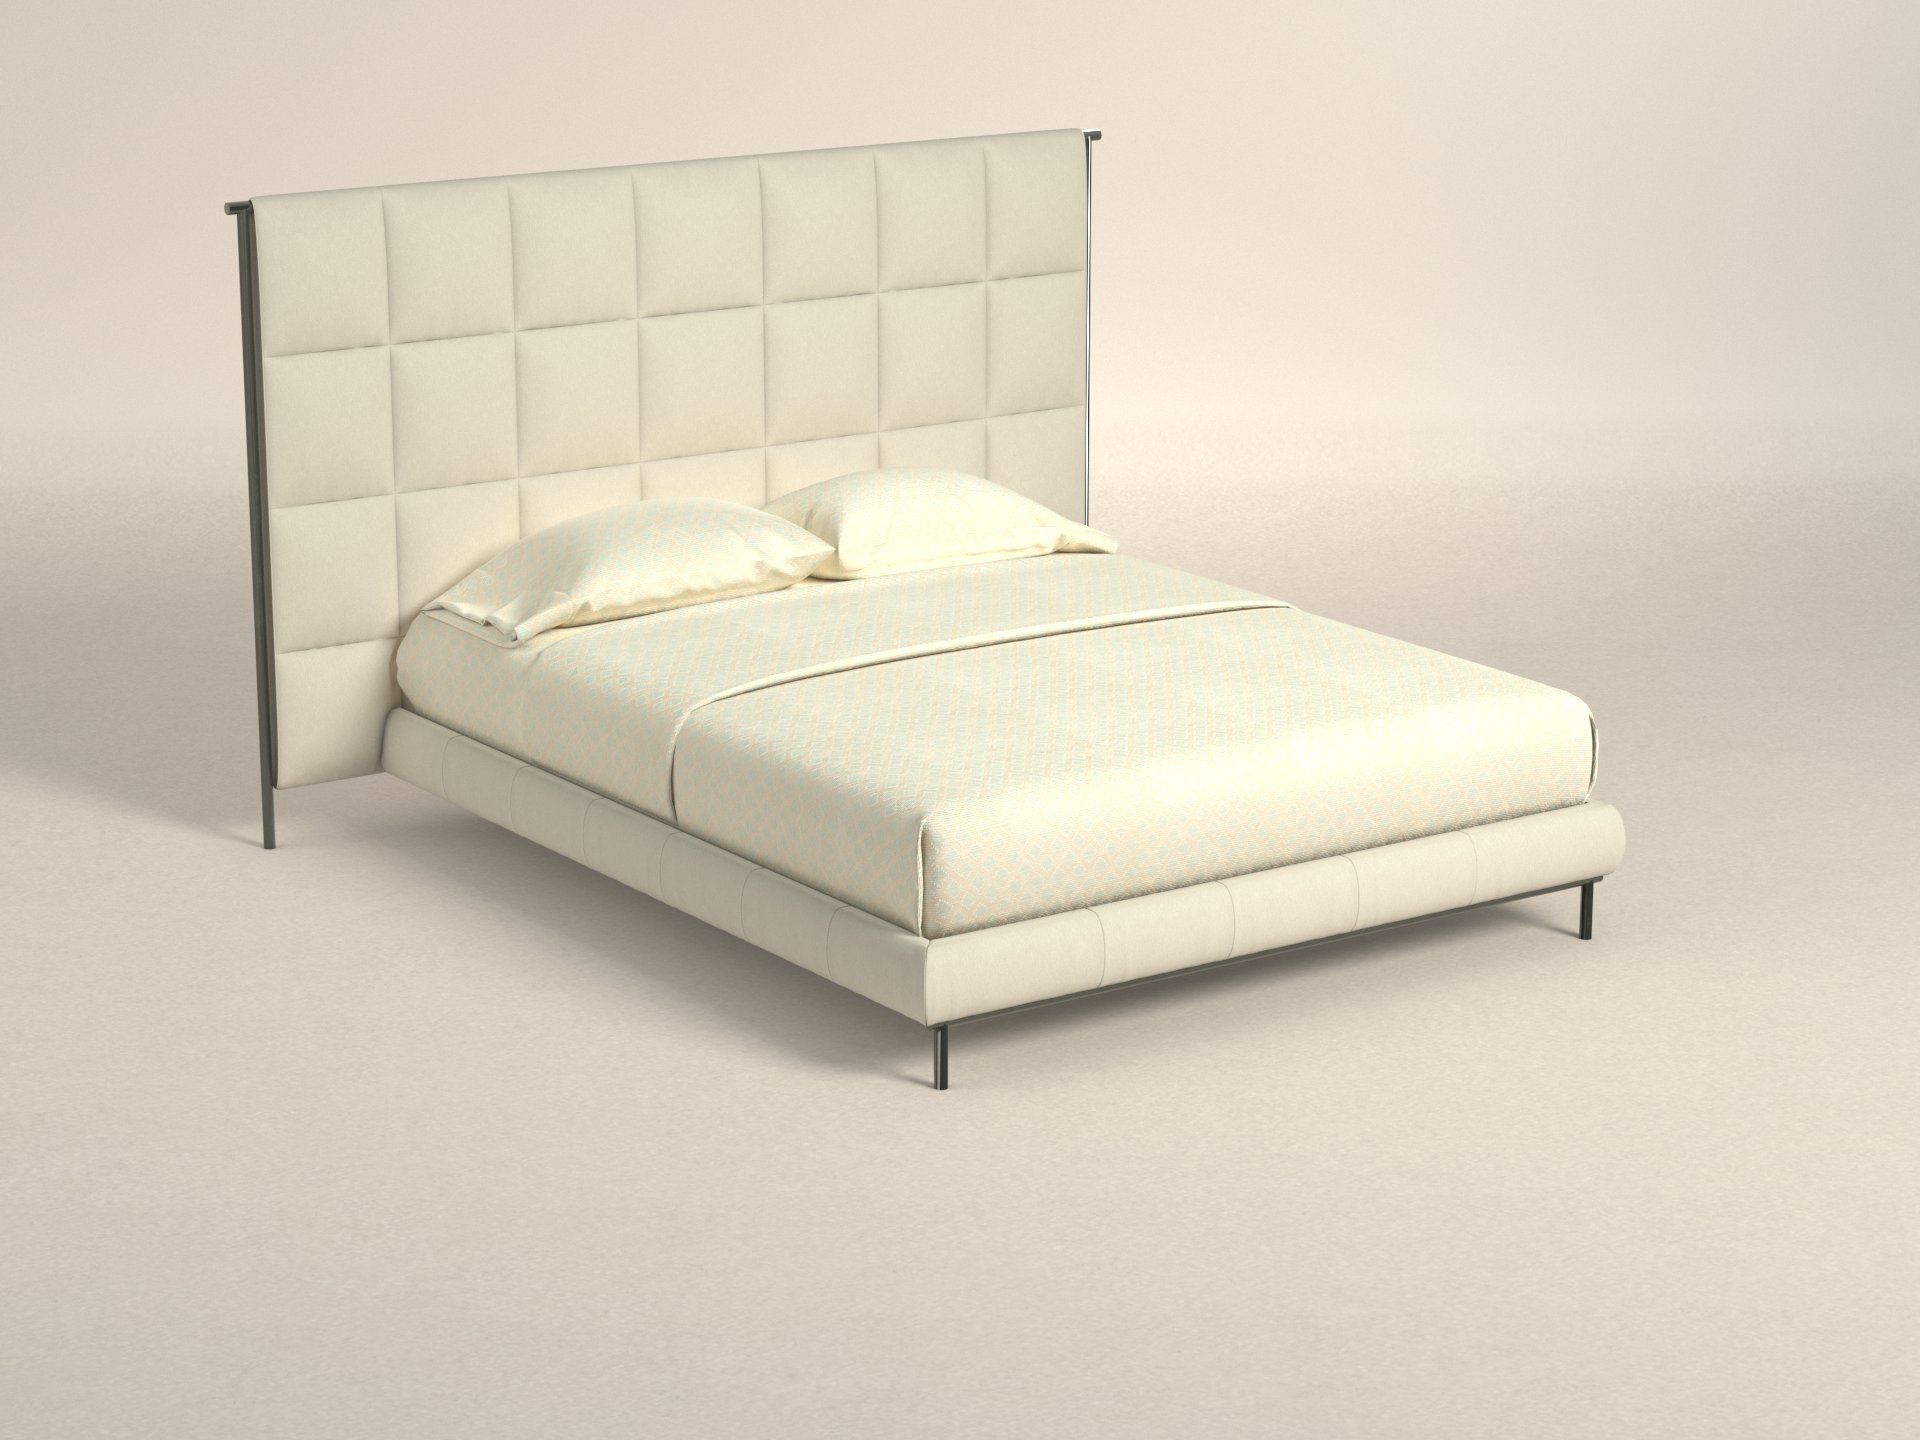 low price bed mattress no sets